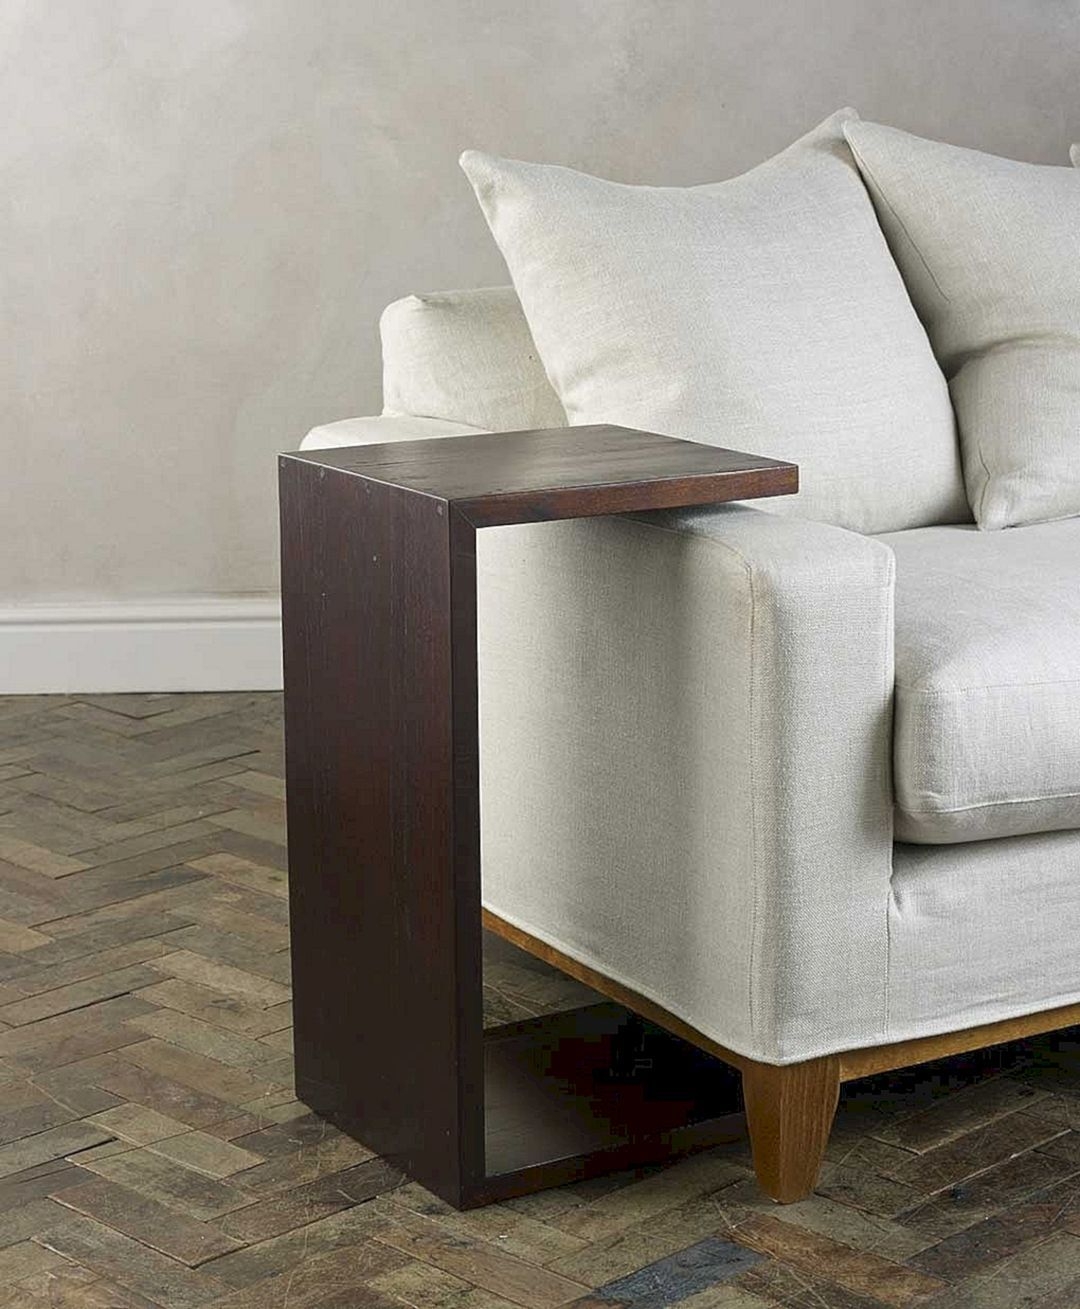 Mineraalwater impliciet Rechtmatig Couch Arm Table - VisualHunt